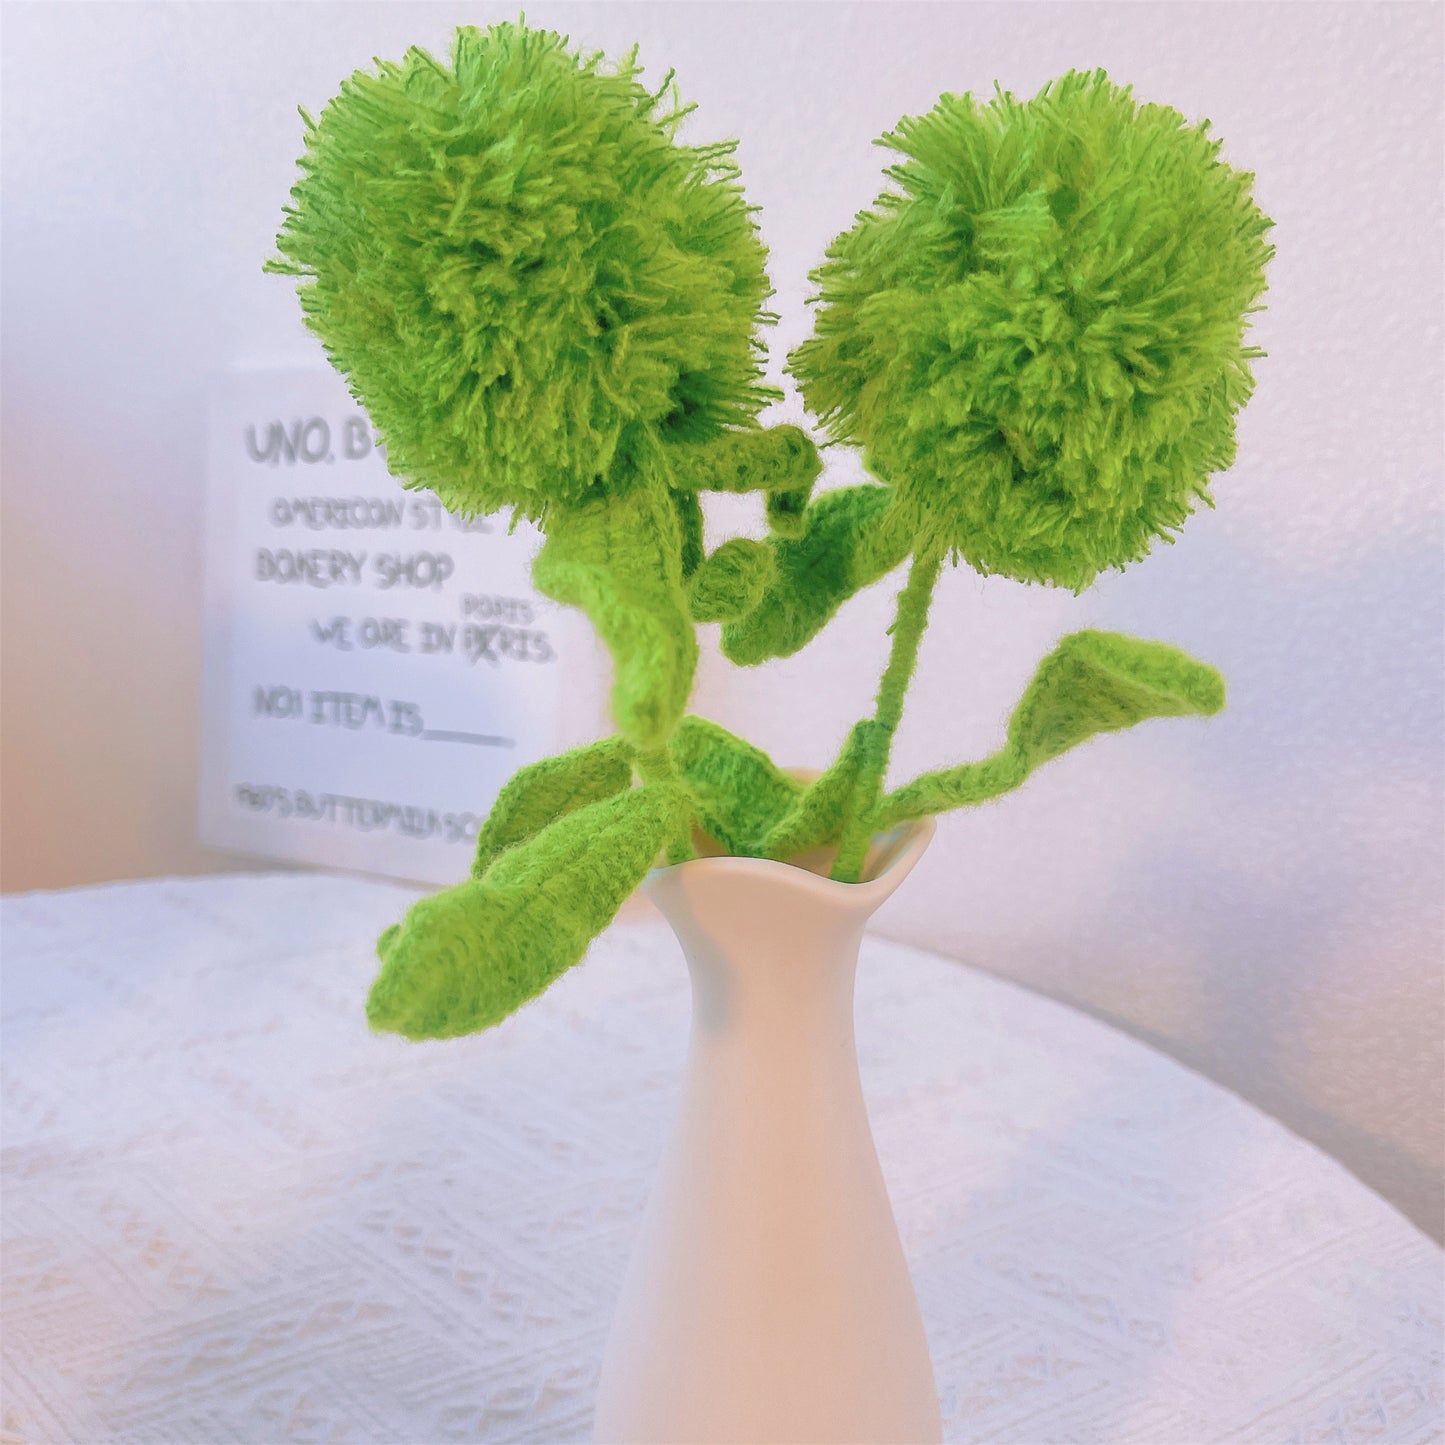 Green Carnation Magic: Handcrafted Crochet Green Carnation Stake for a Enchanting Garden Decor